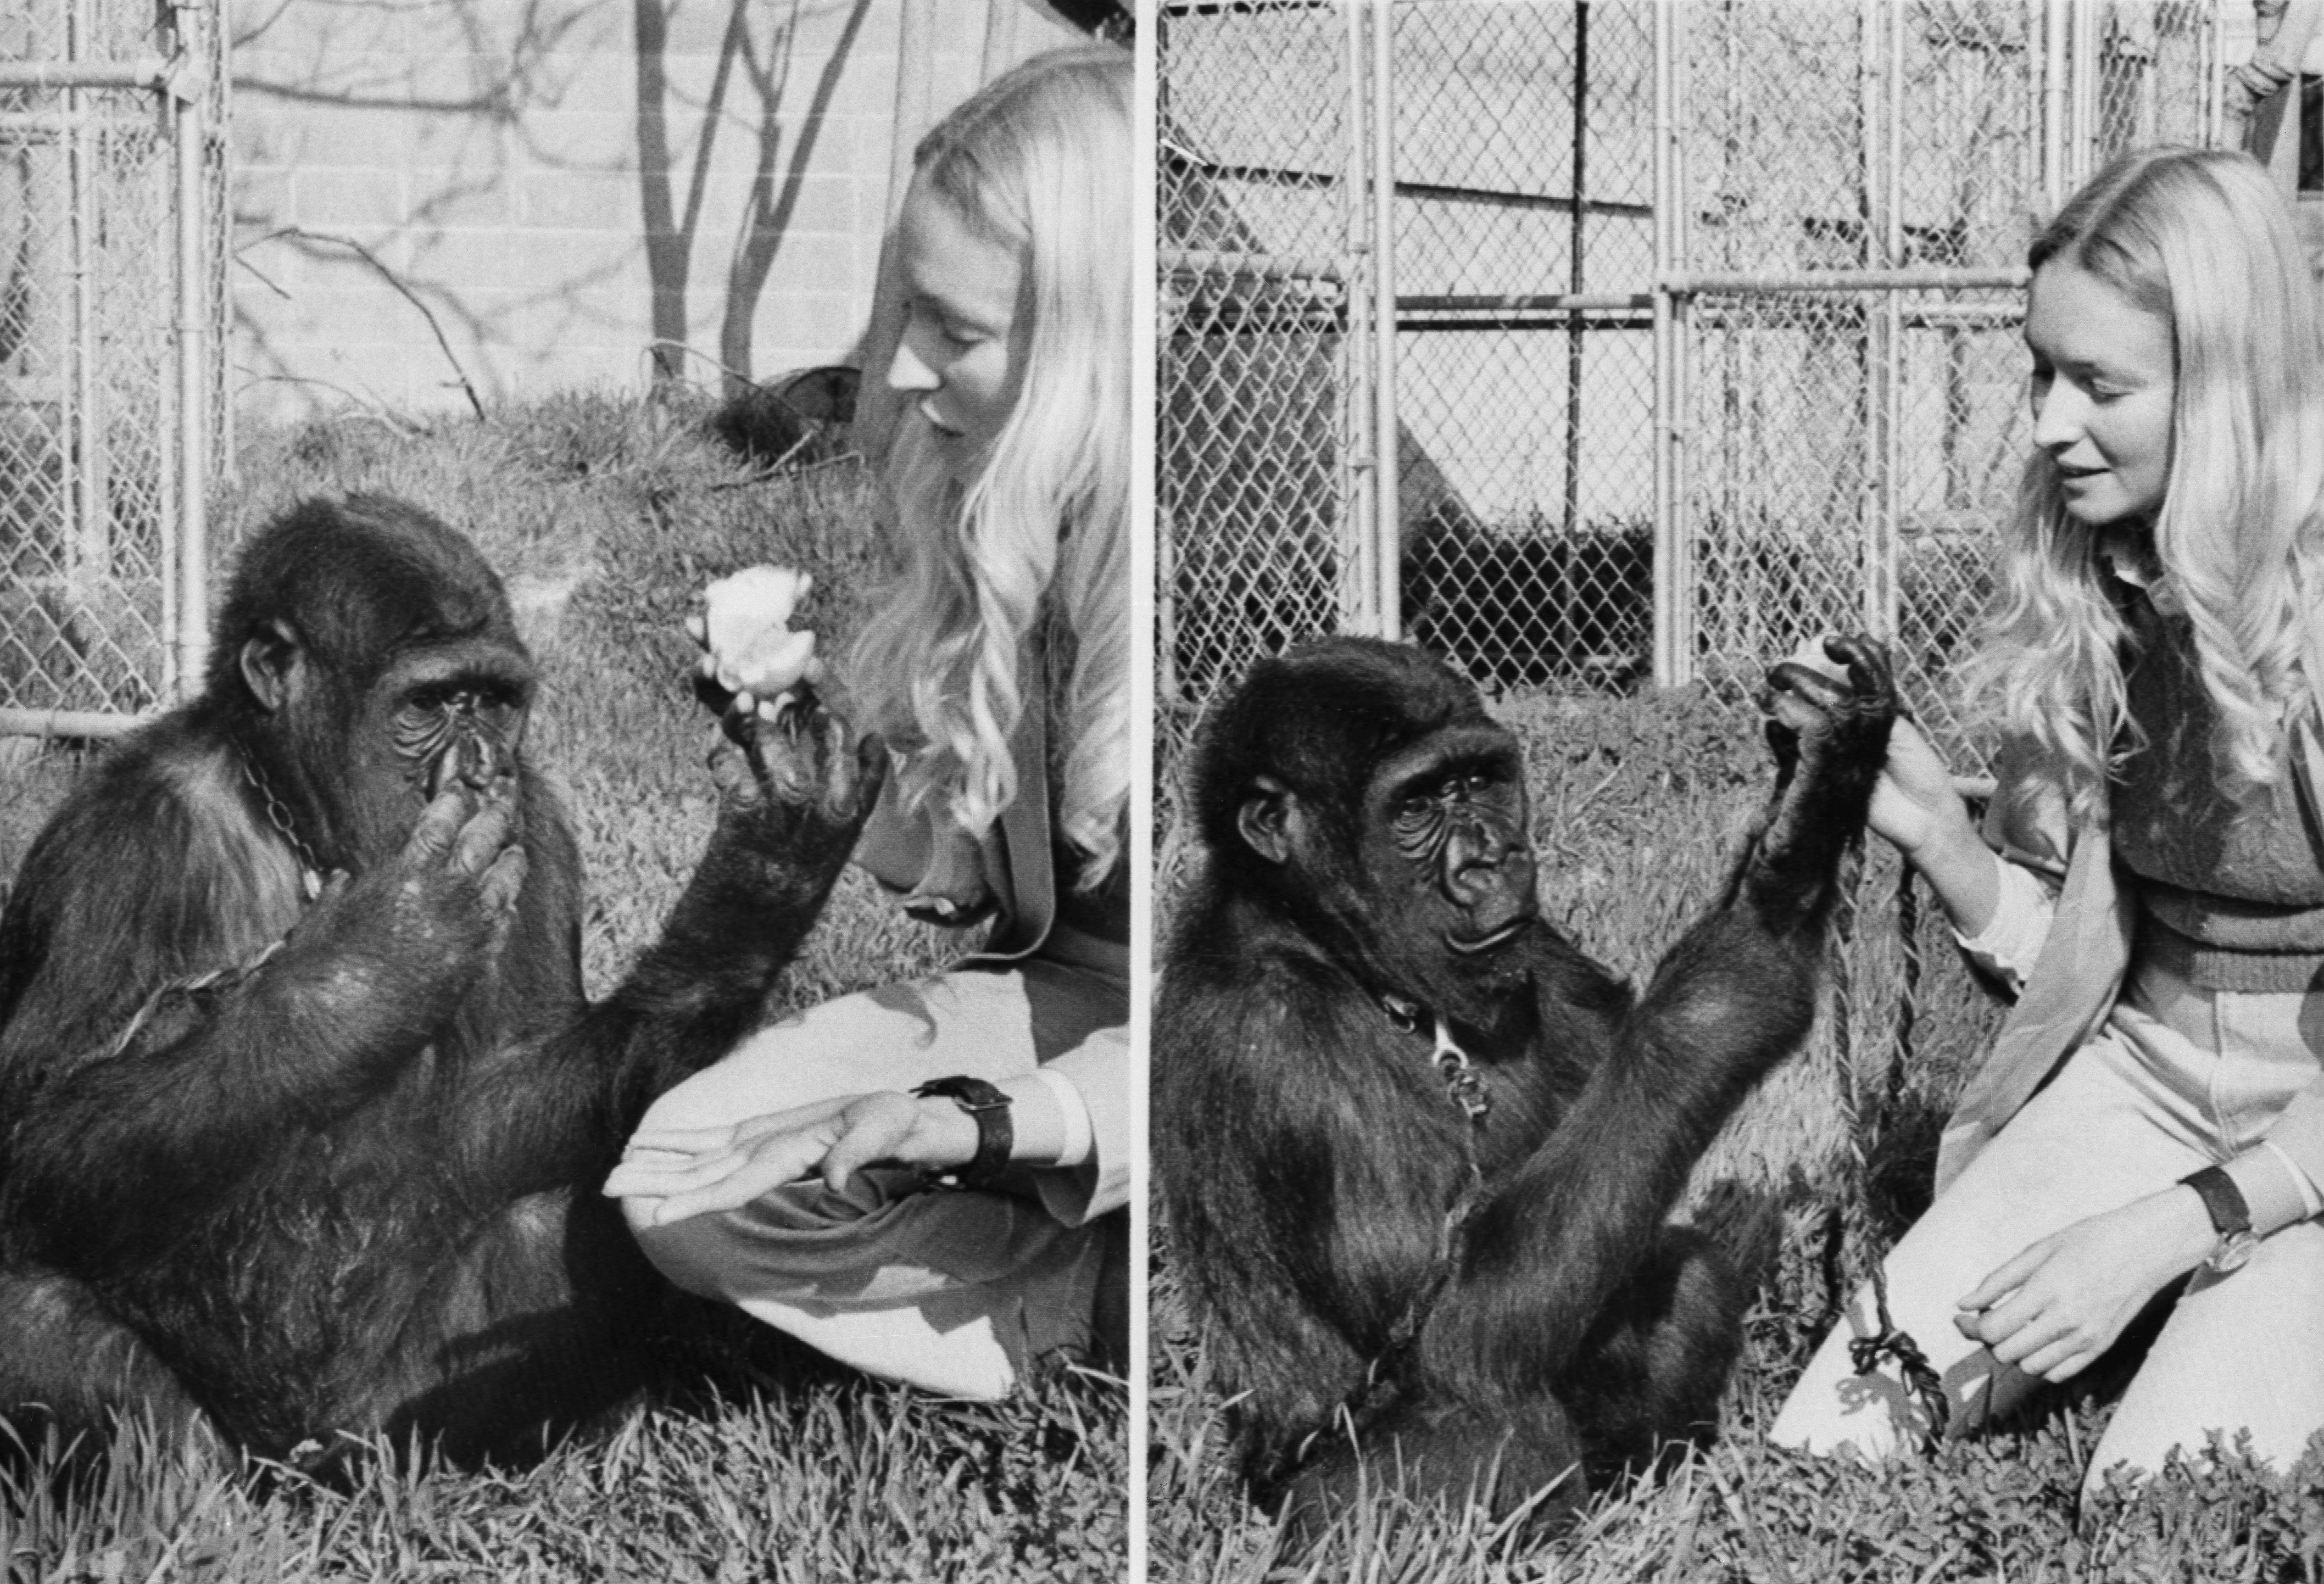 Koko the Gorilla Using Sign Language